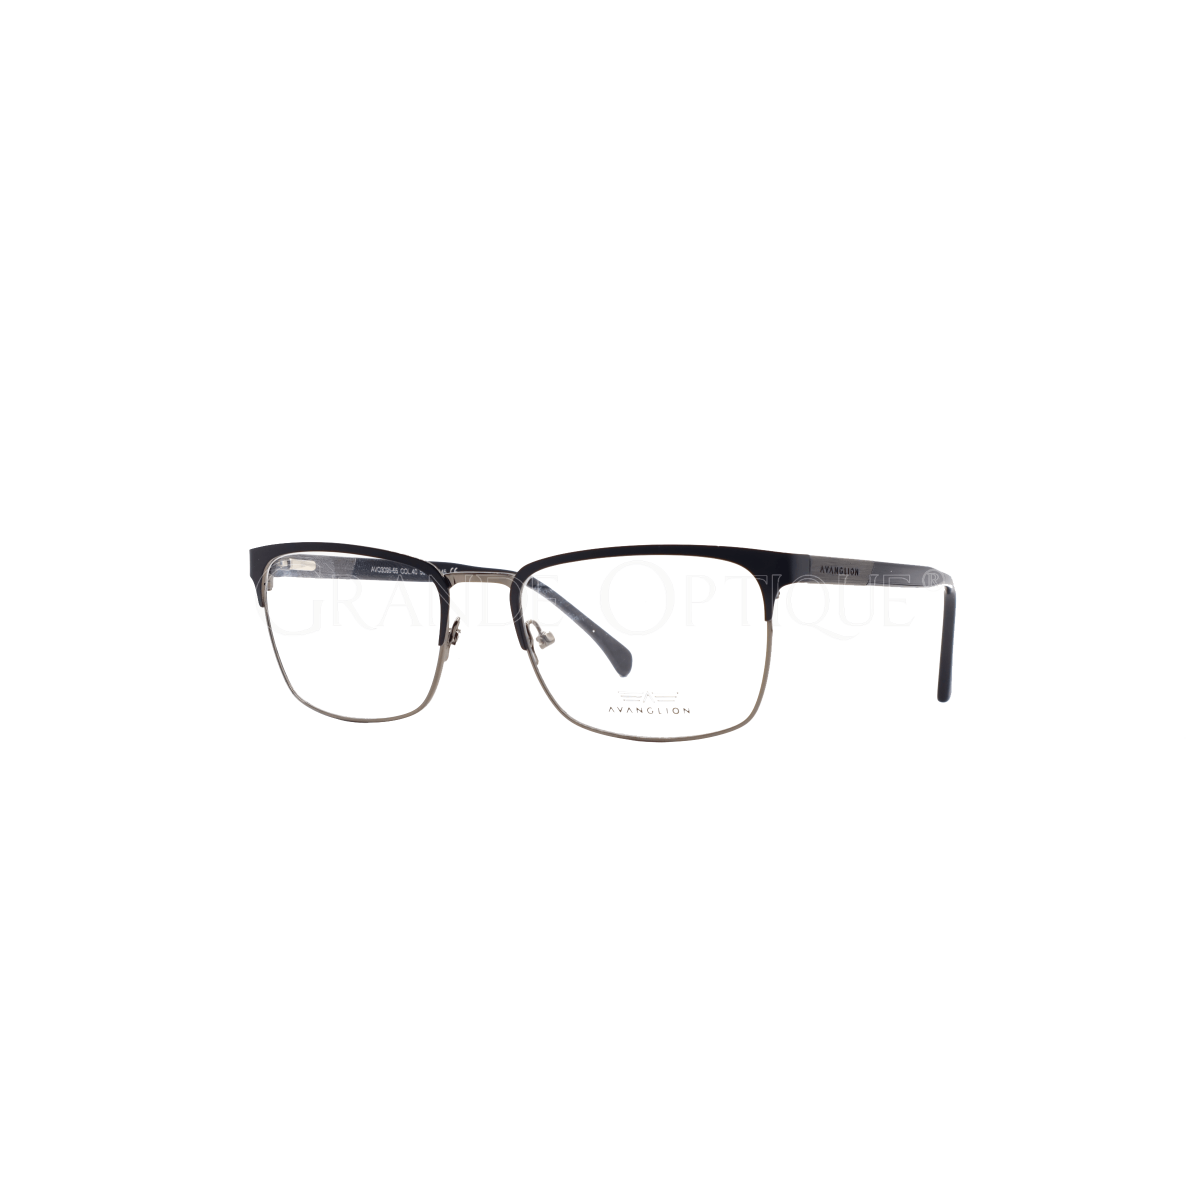 Rame de ochelari Avanglion AVO3095 40